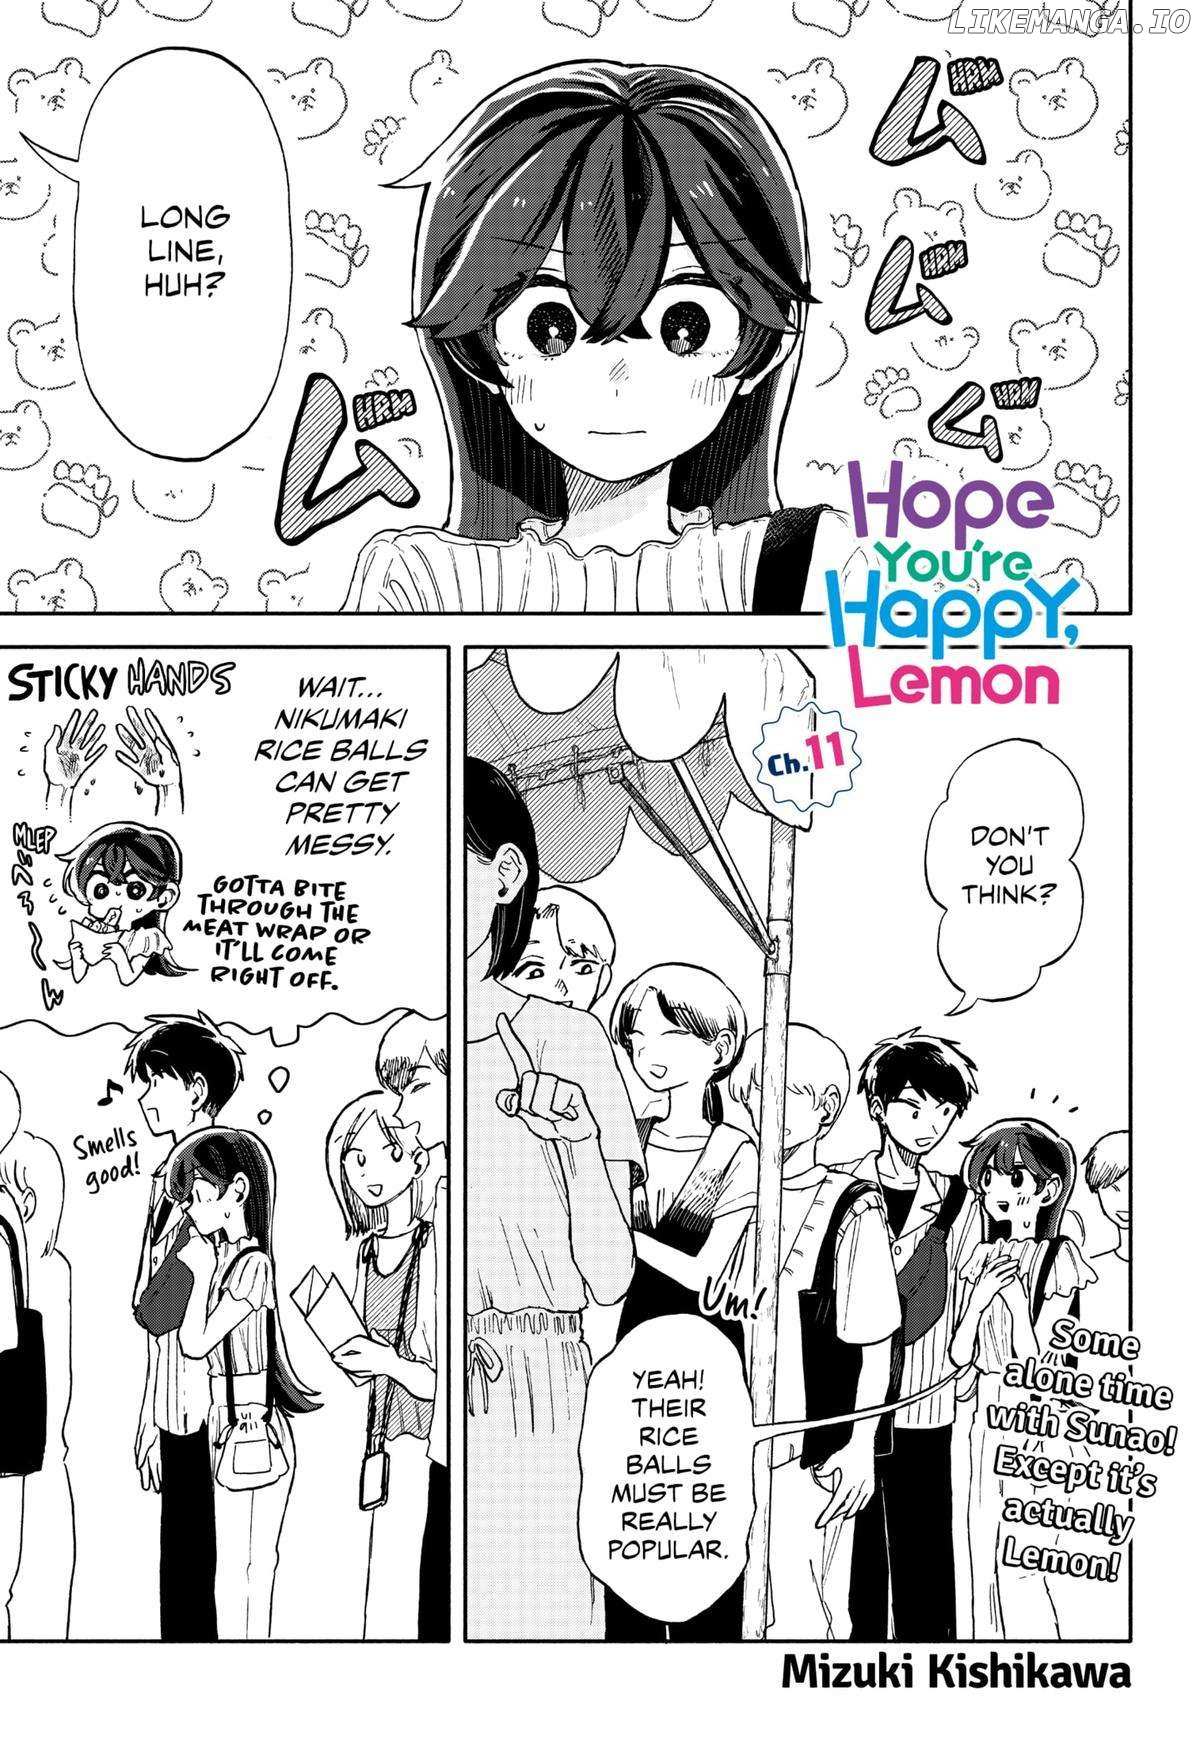 Hope You're Happy, Lemon - 11 page 2-bbec55ac